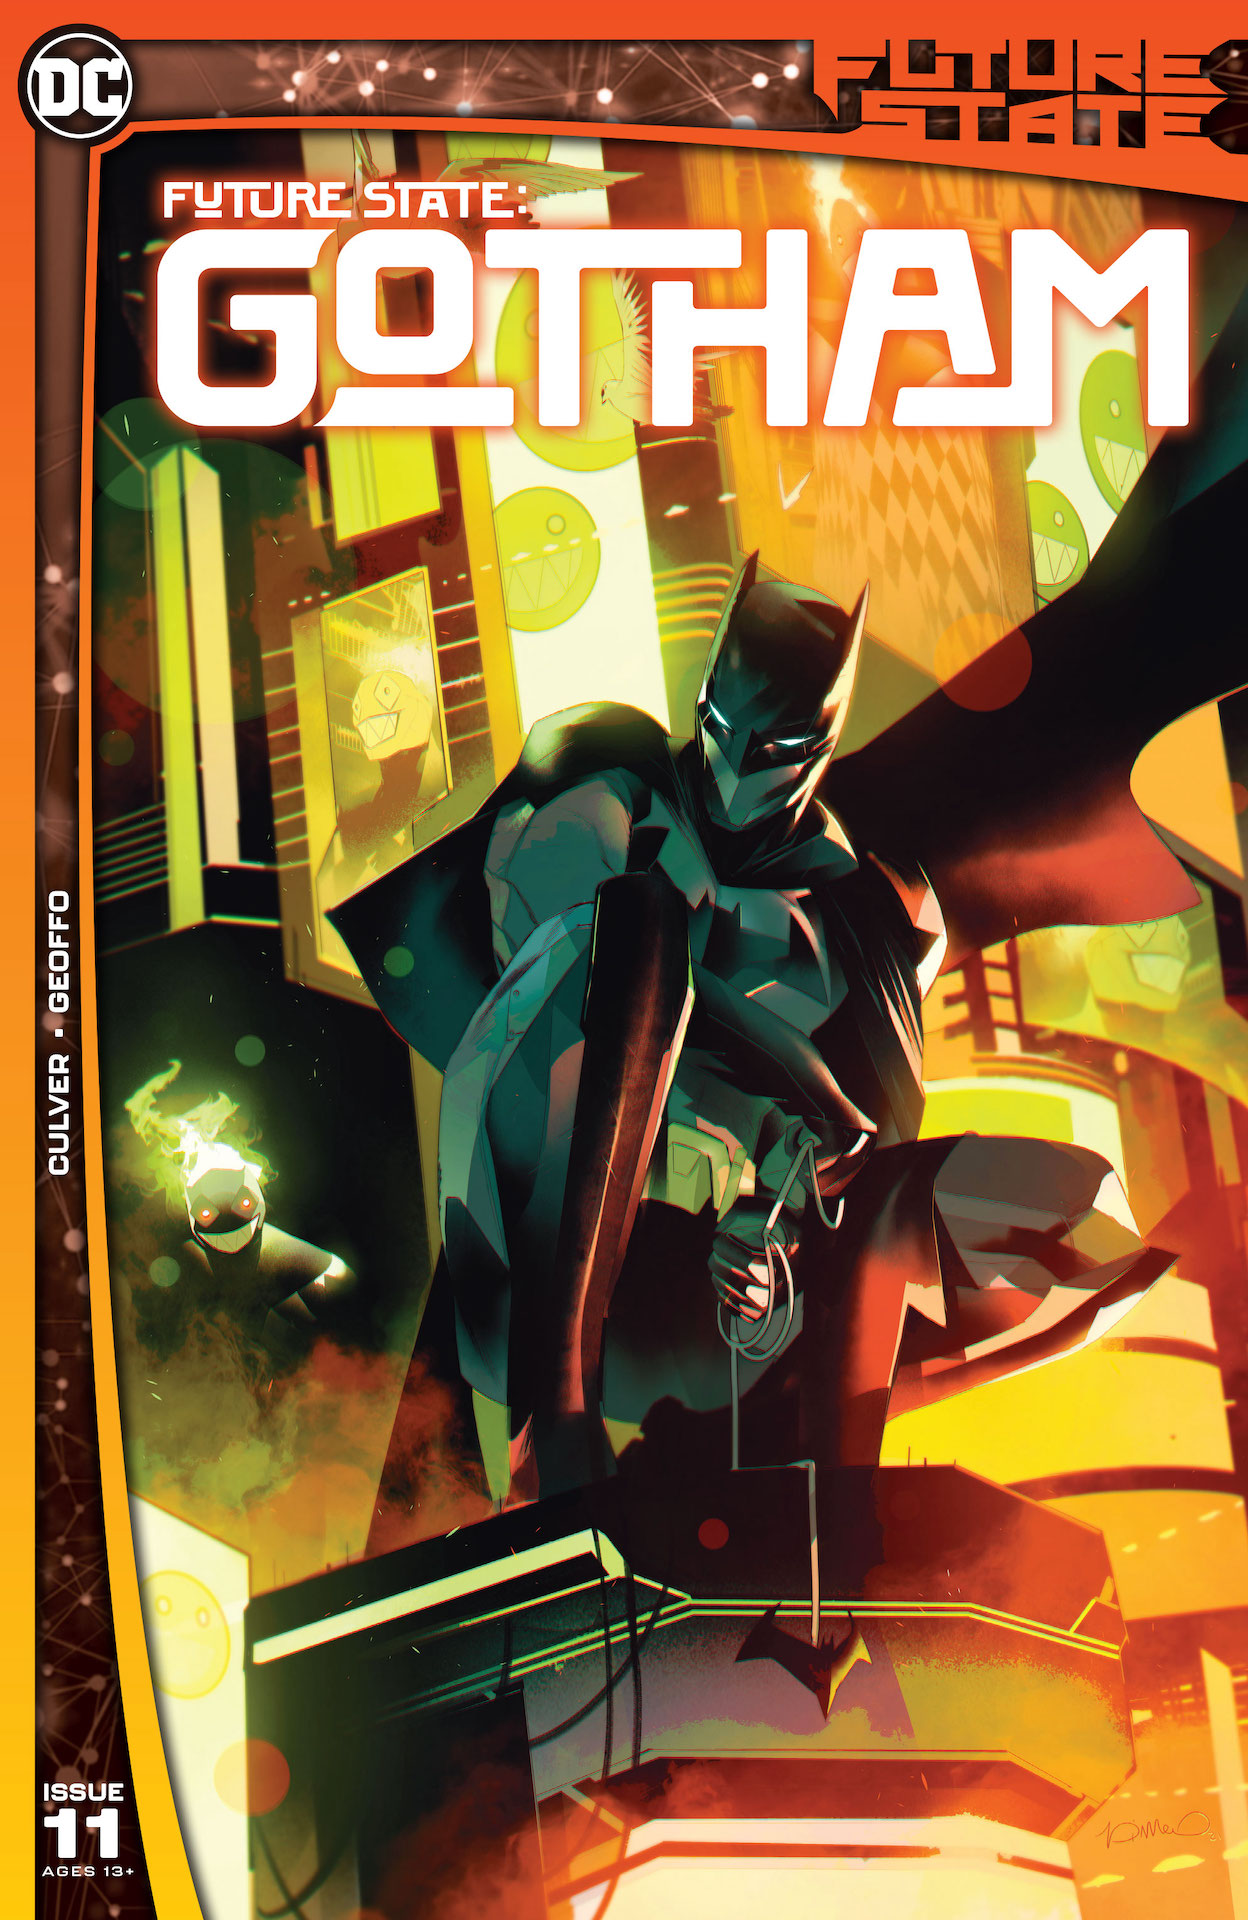 DC Preview: Future State: Gotham #11